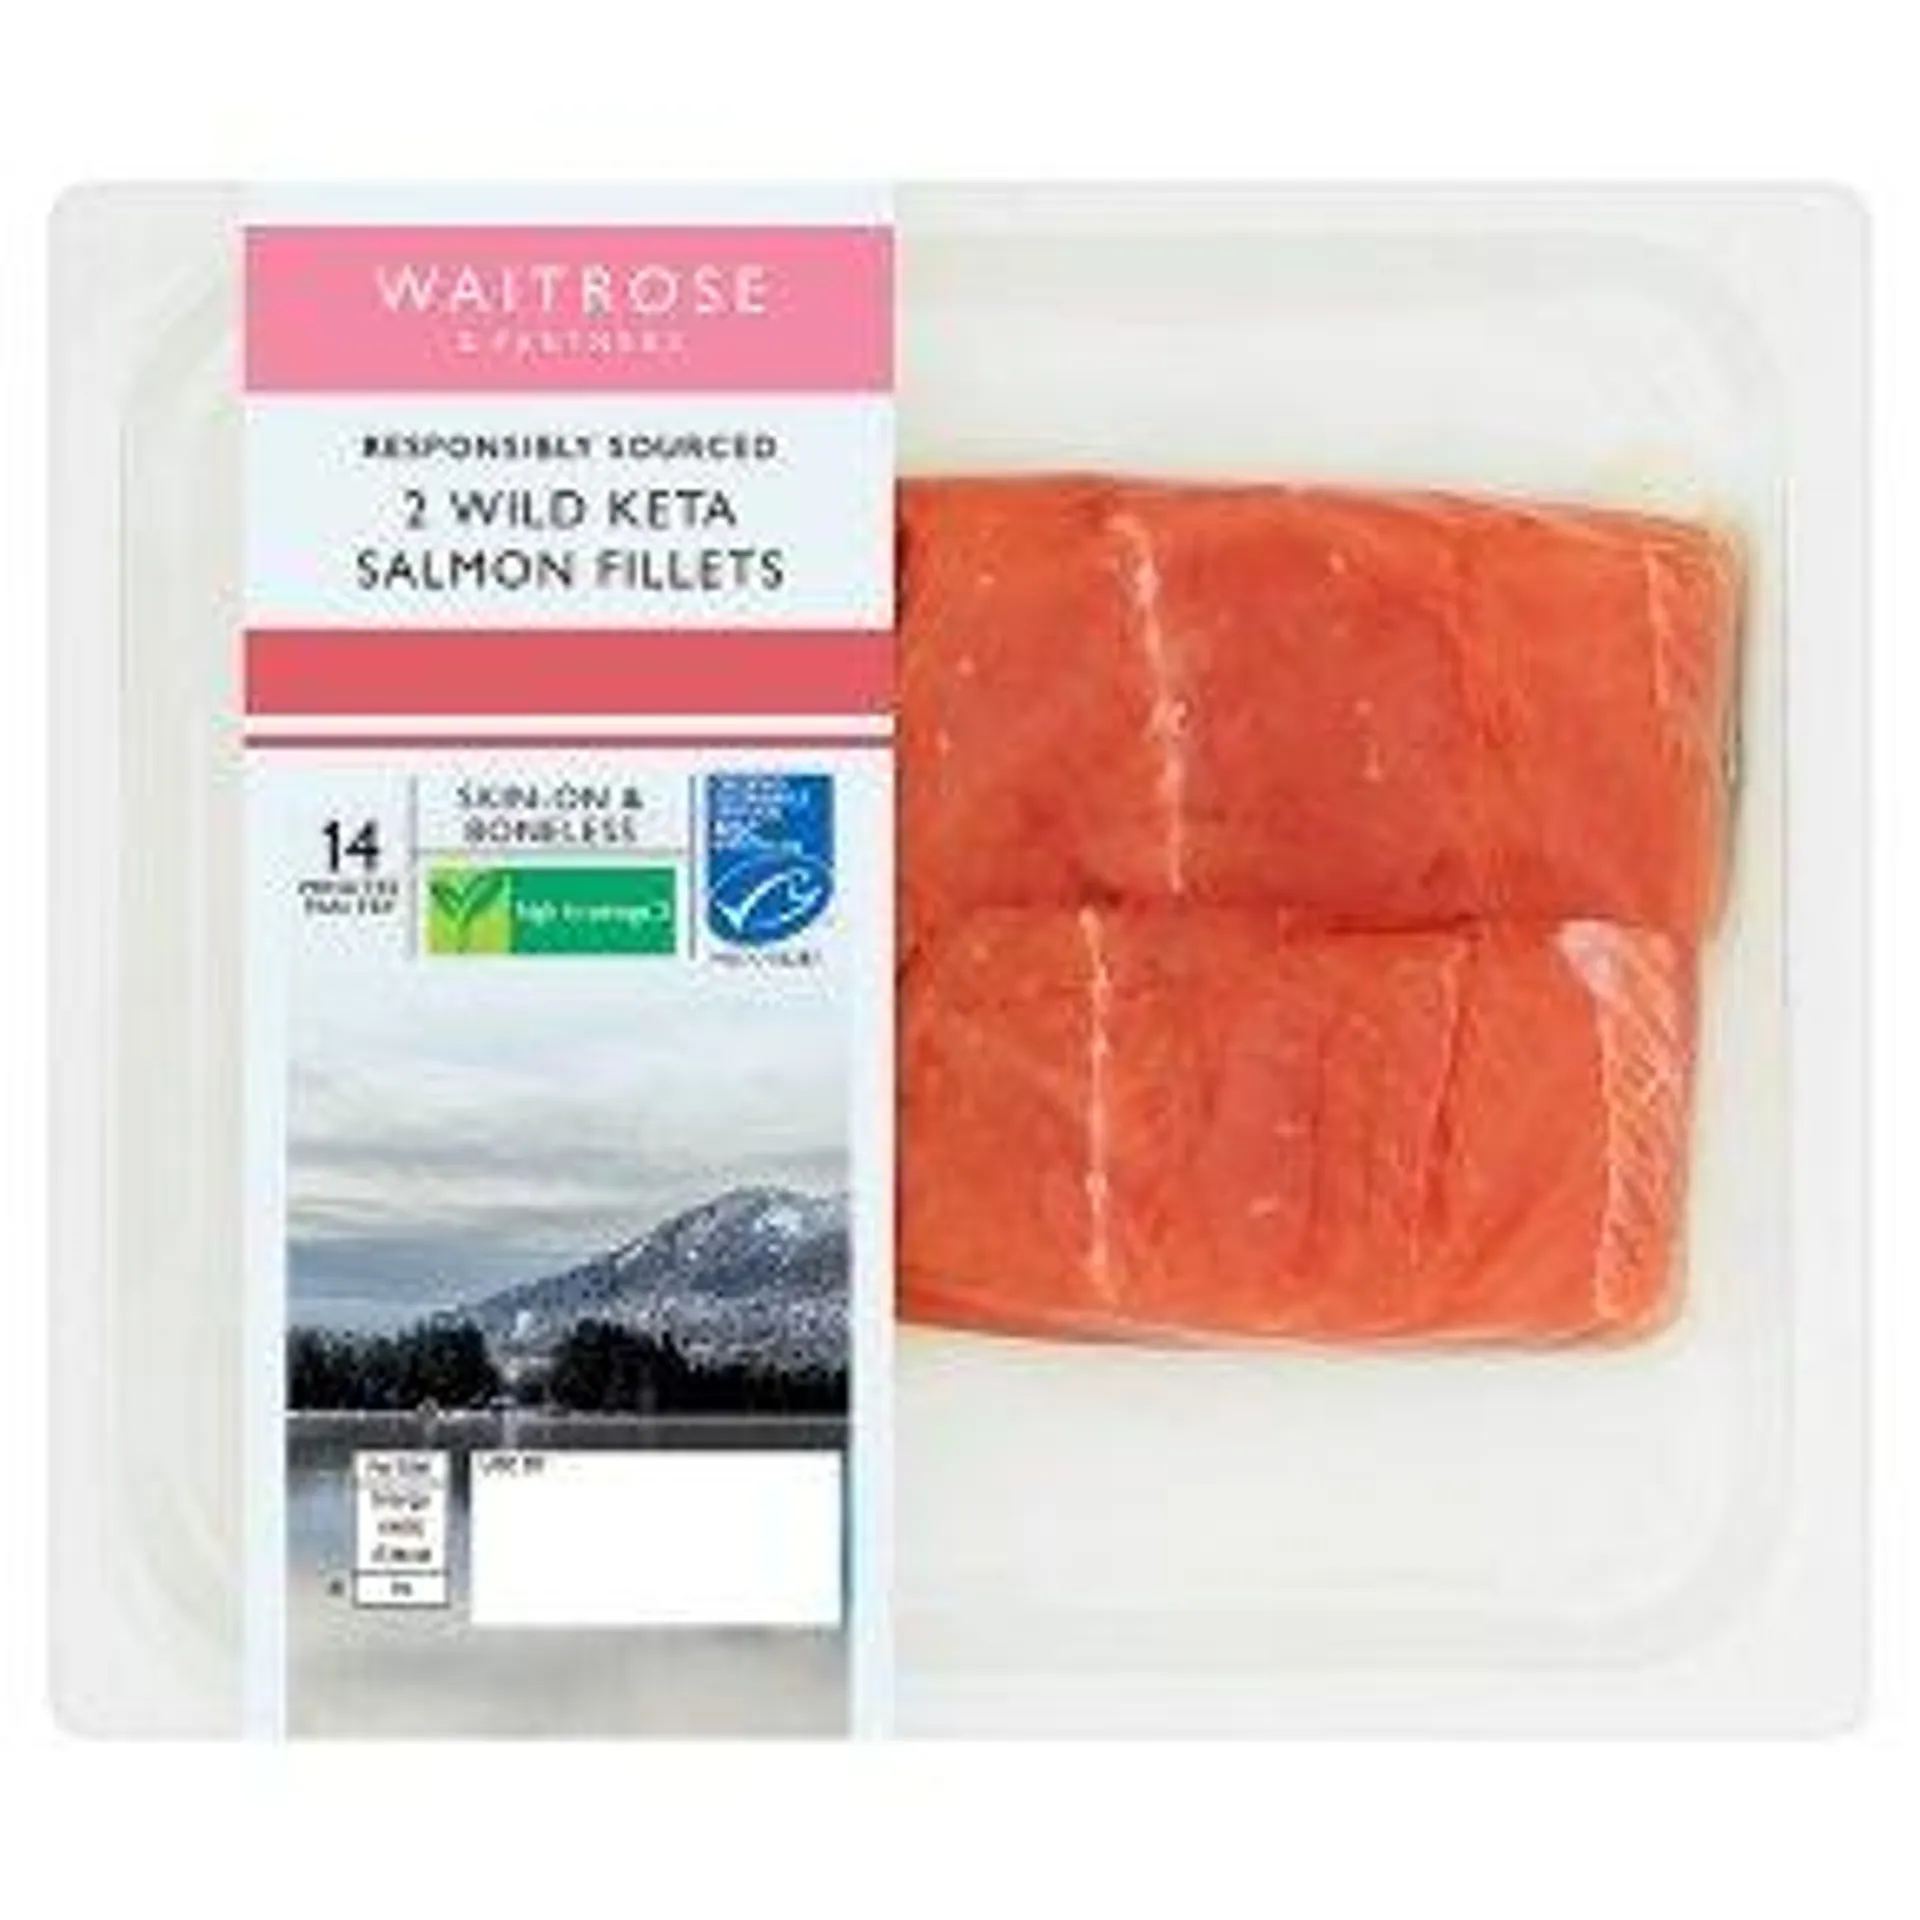 Waitrose 2 MSC Wild Keta Salmon Fillets